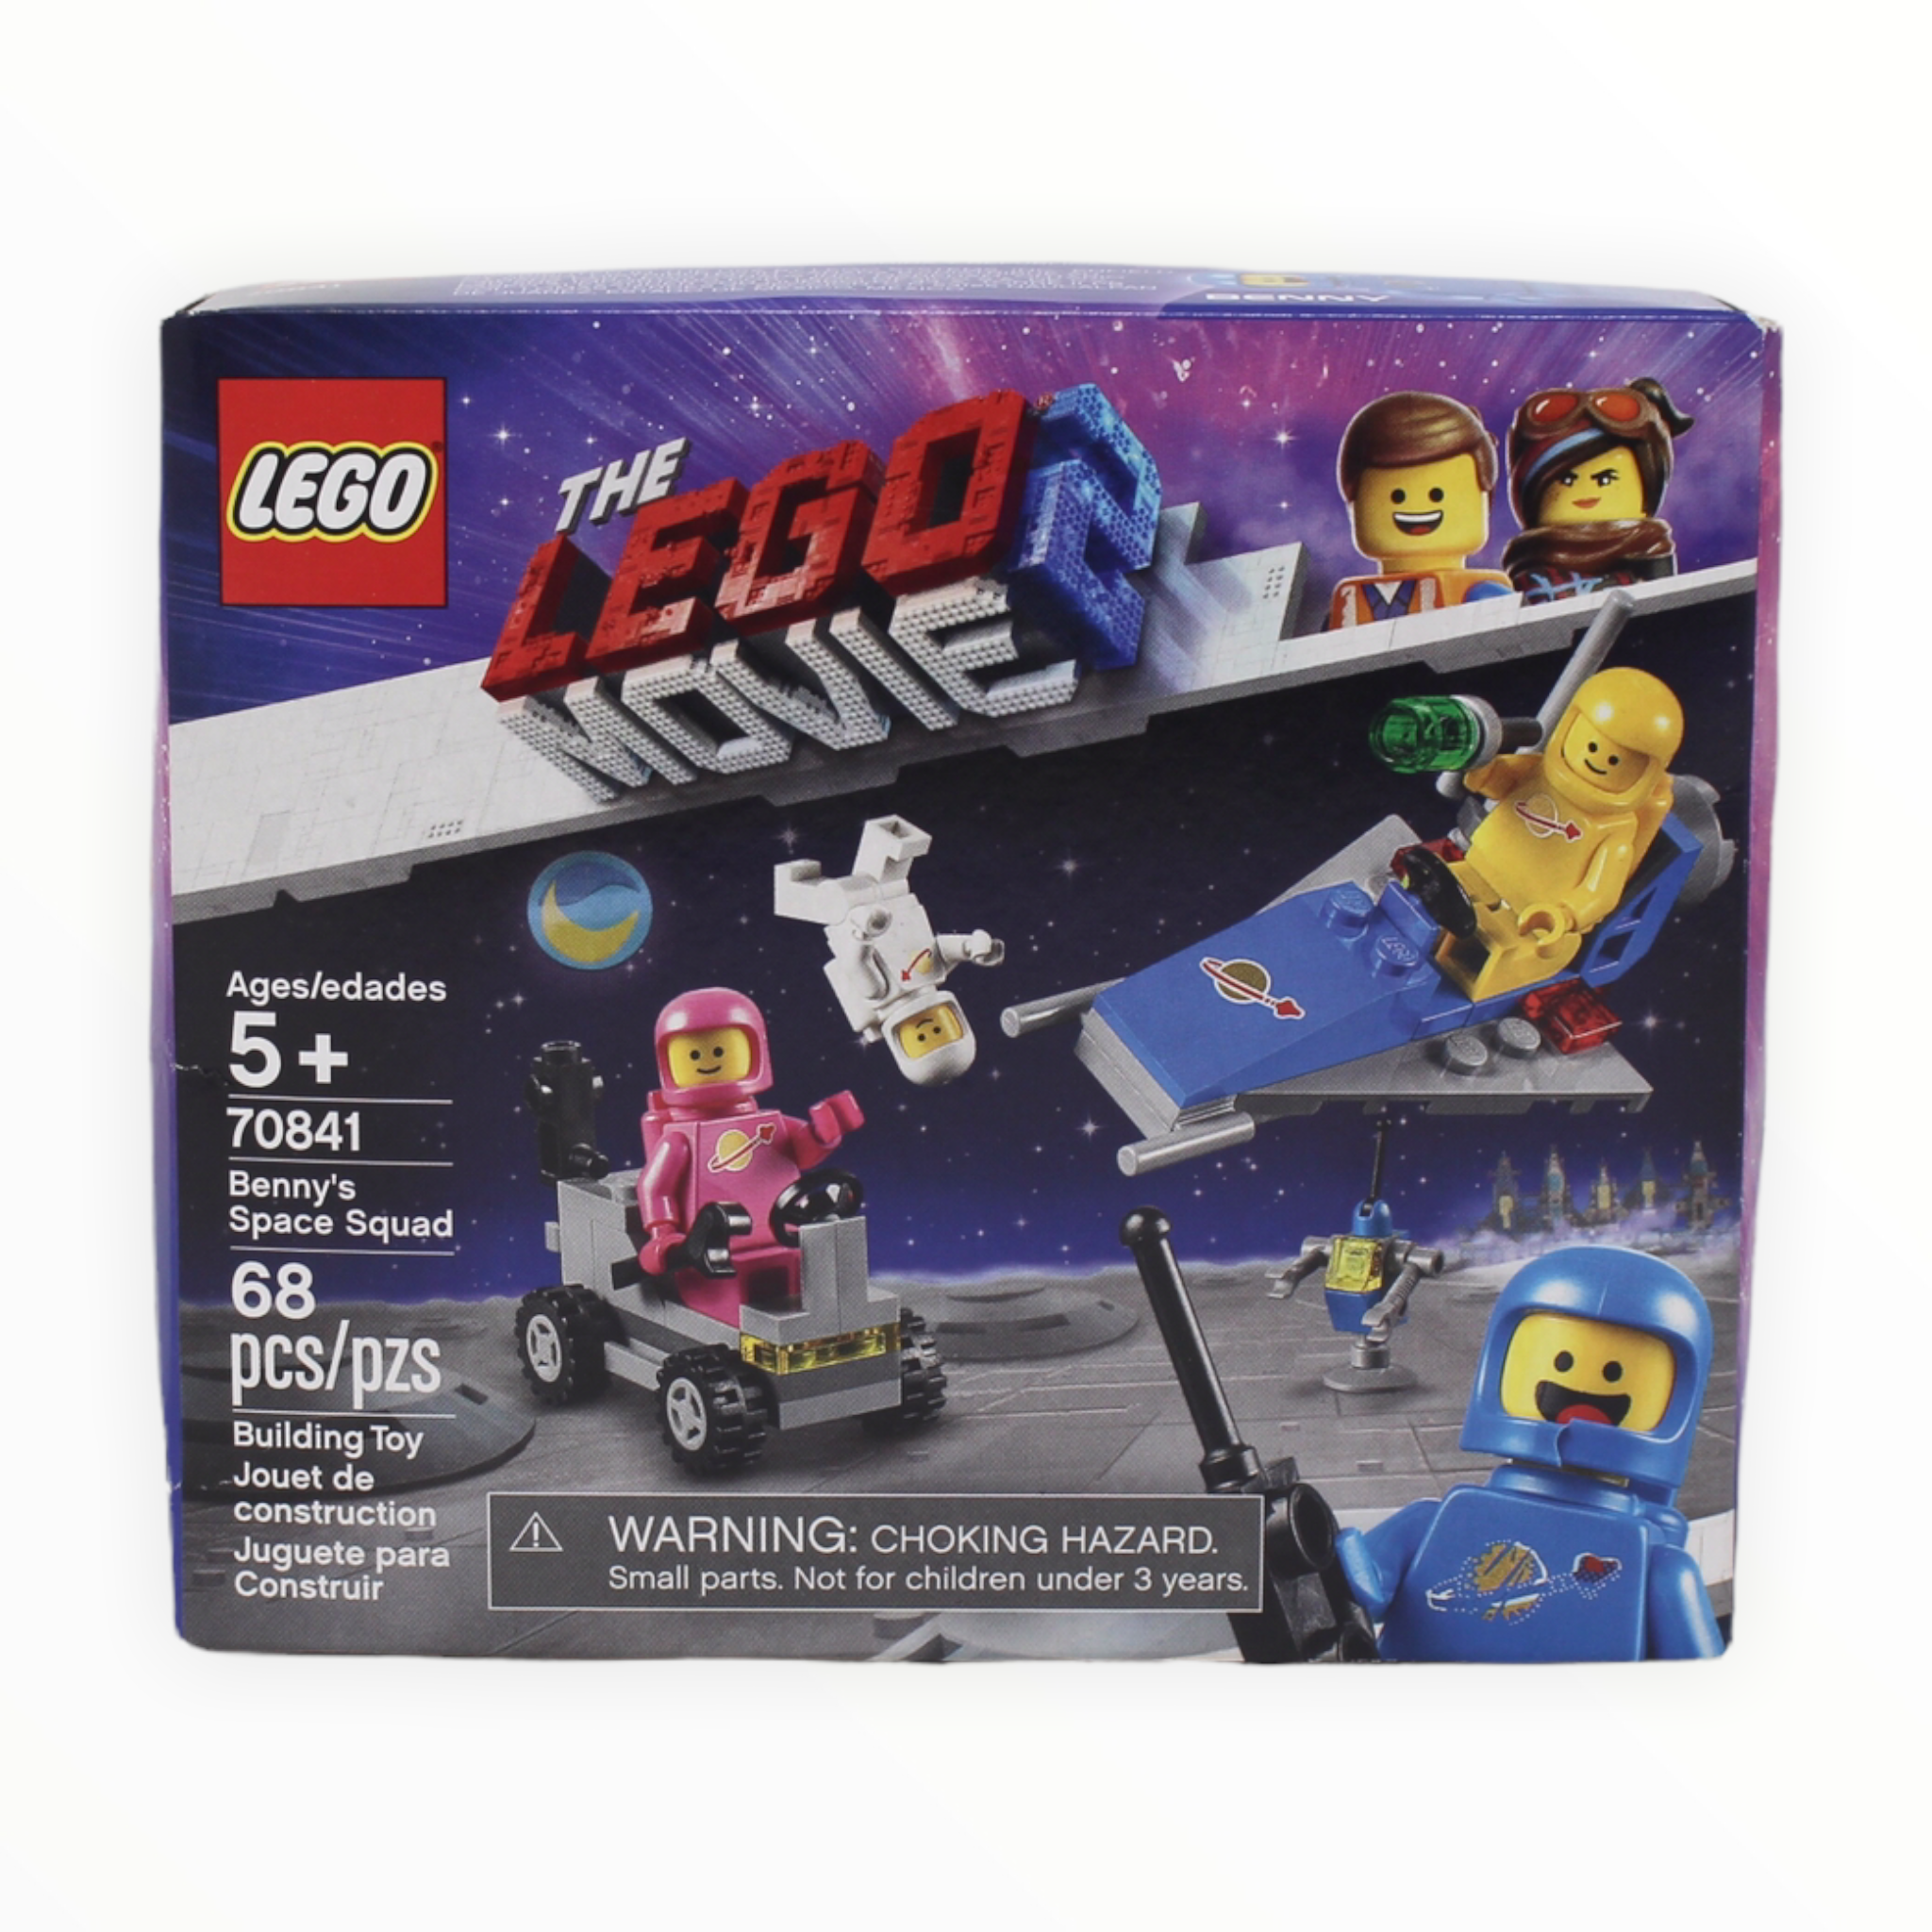 Retired Set 70841 LEGO Movie 2 Benny’s Space Squad